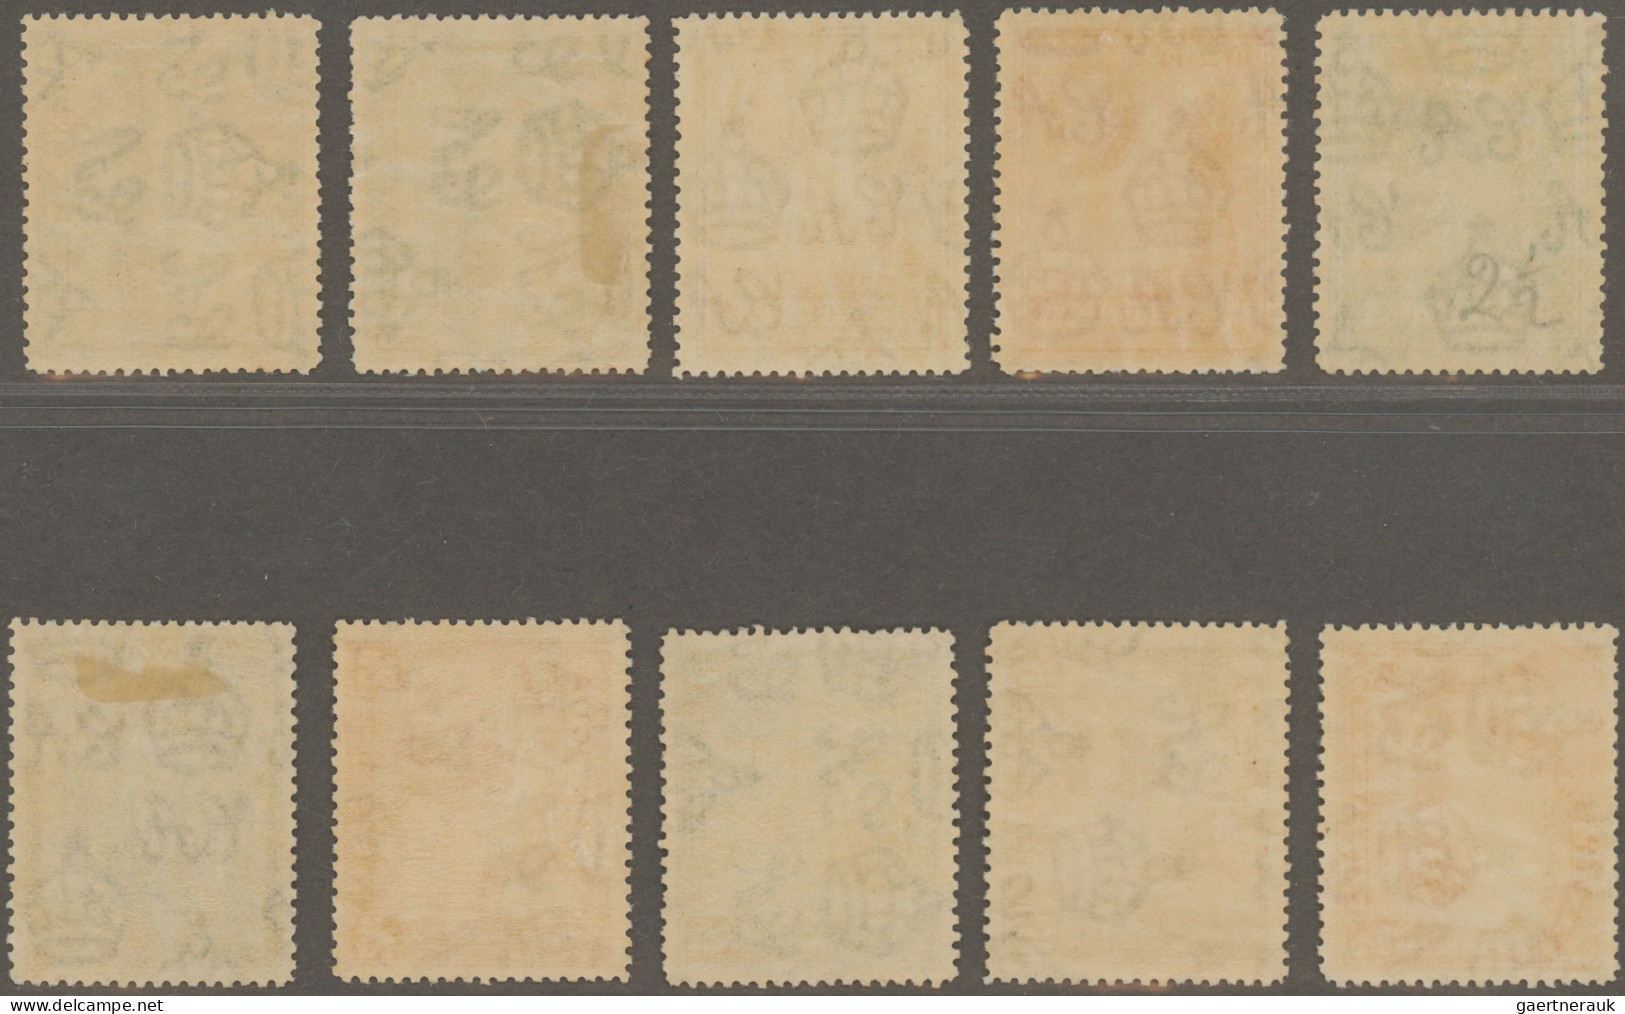 Antigua: 1932, Treventenary, 10 Values, Mint, Complete Set. Michel 260 € - 1960-1981 Ministerial Government